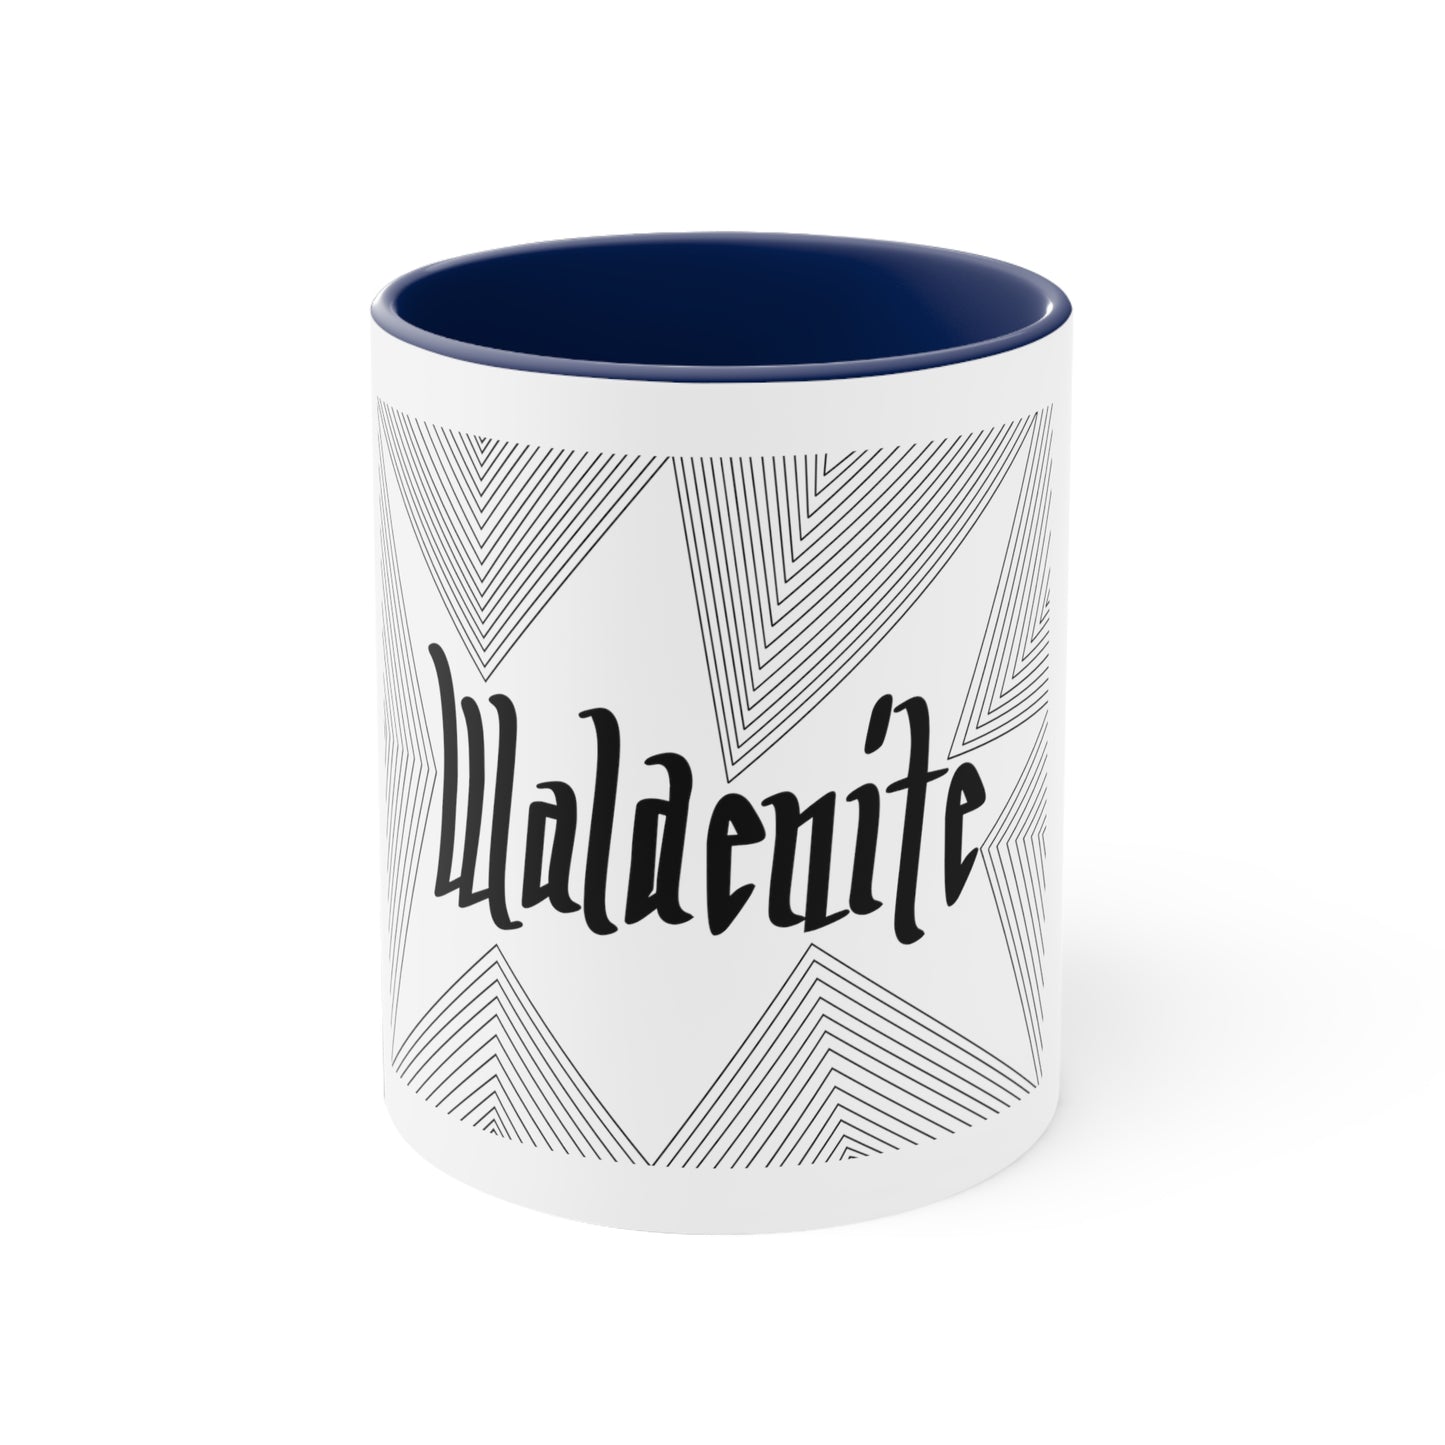 Waldenite Coffee Mug